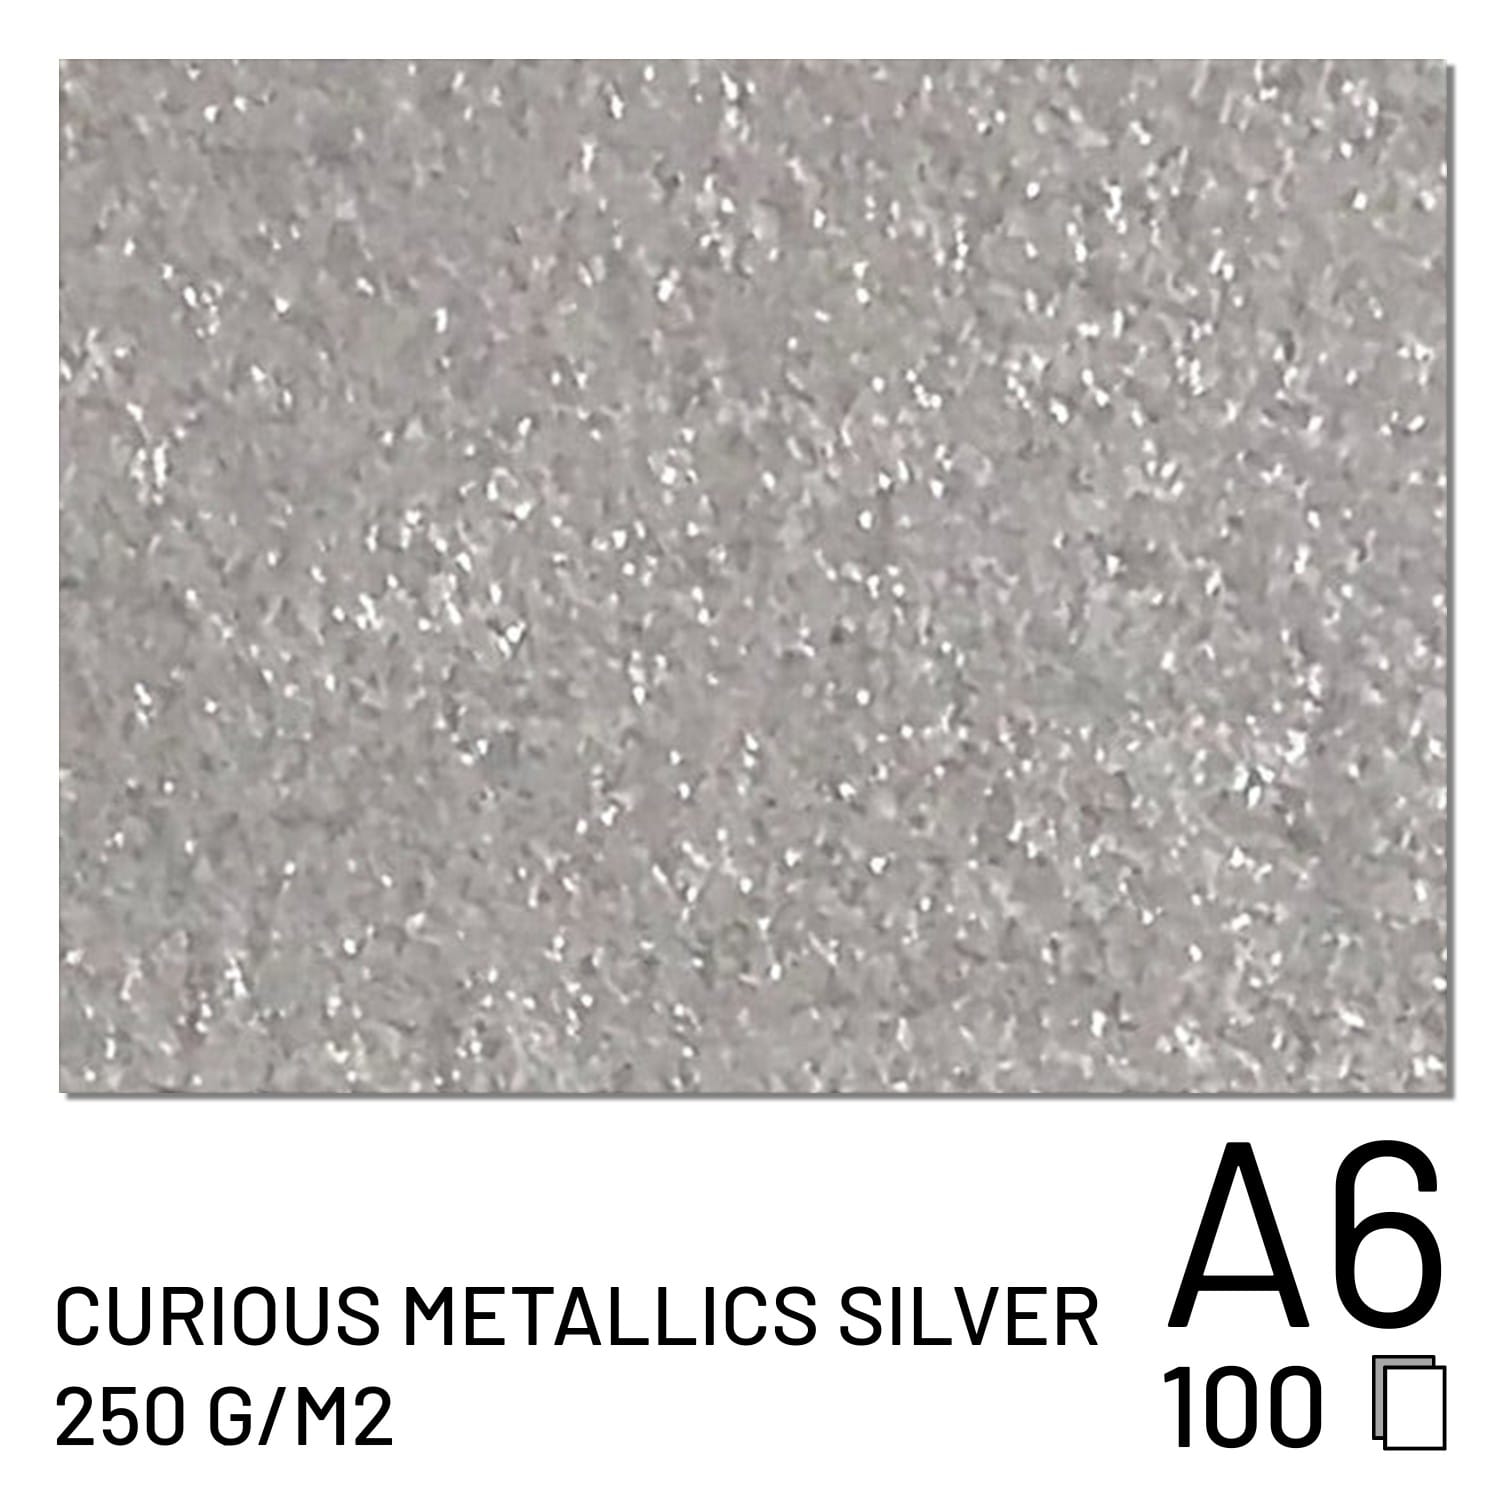 Papier FUJI Curious Metallics Silver - 250g A6 (100 feuilles) (70100148101)